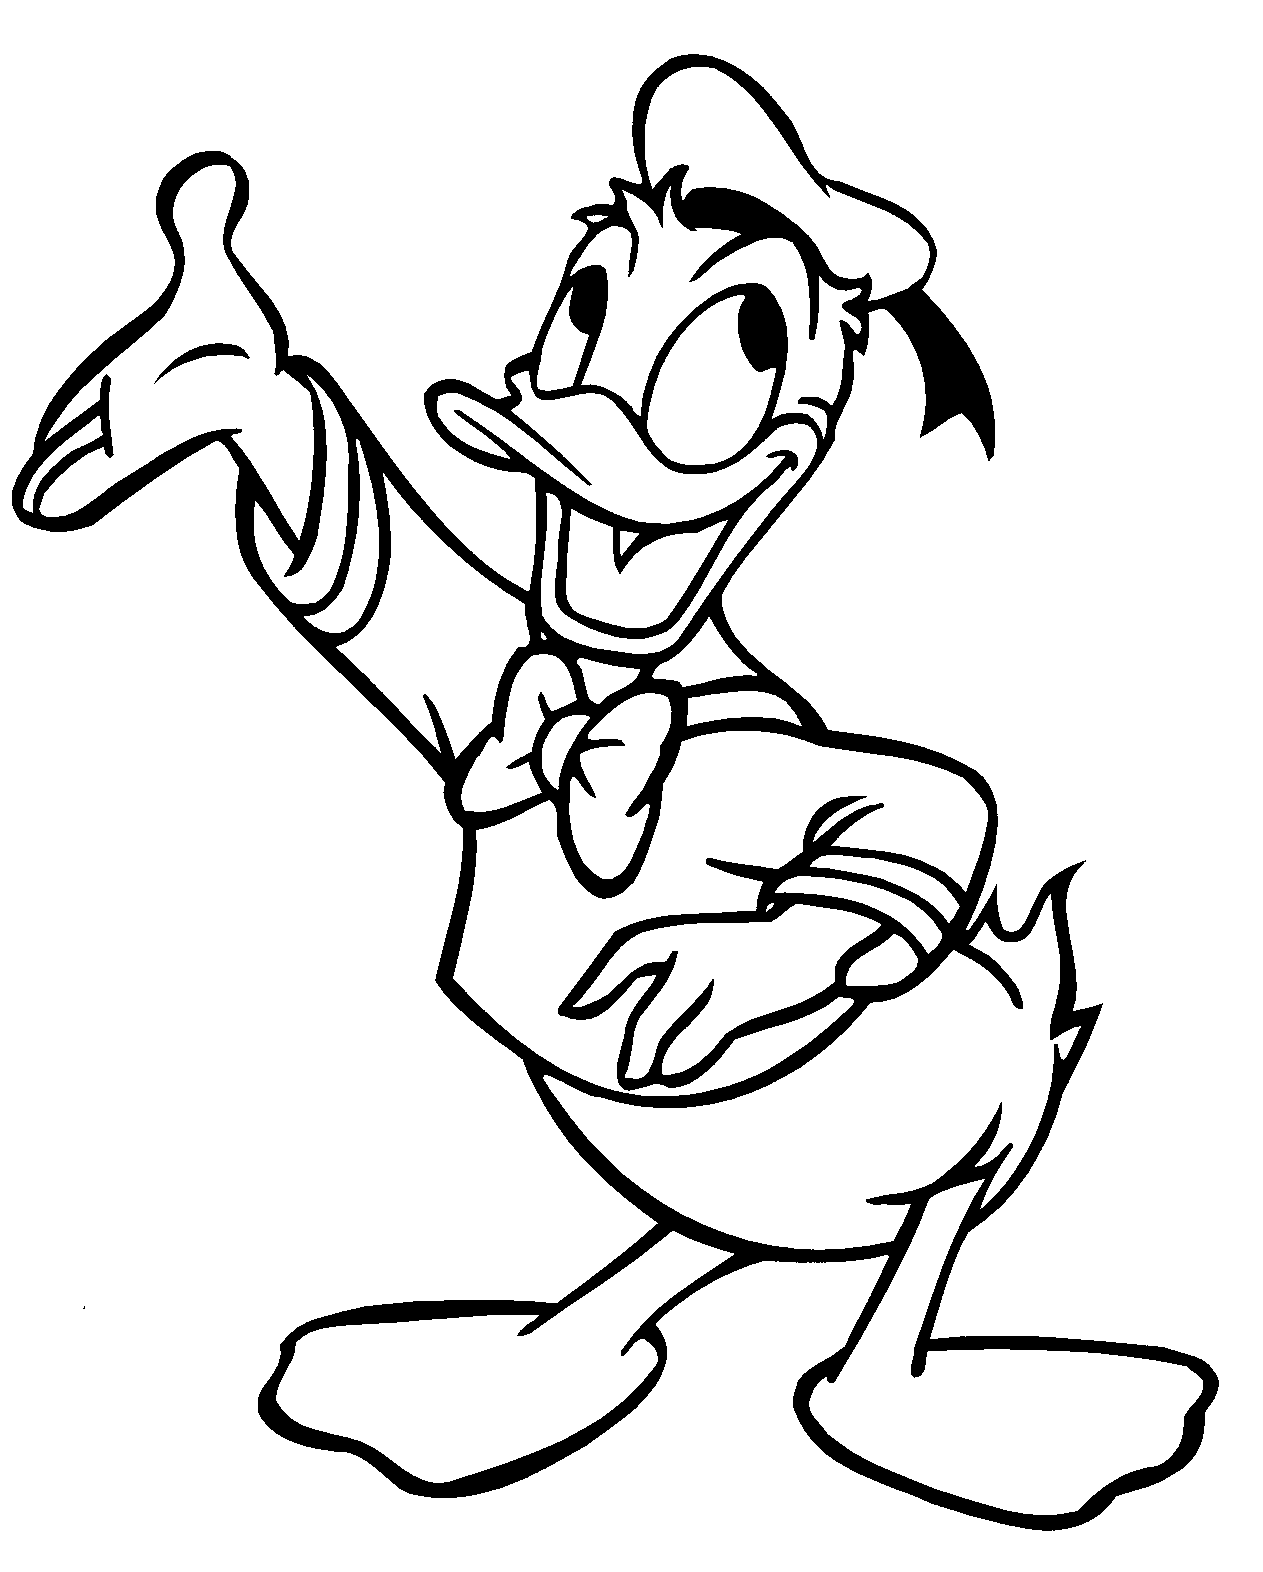 Donald Duck weekblad - Wikipedia